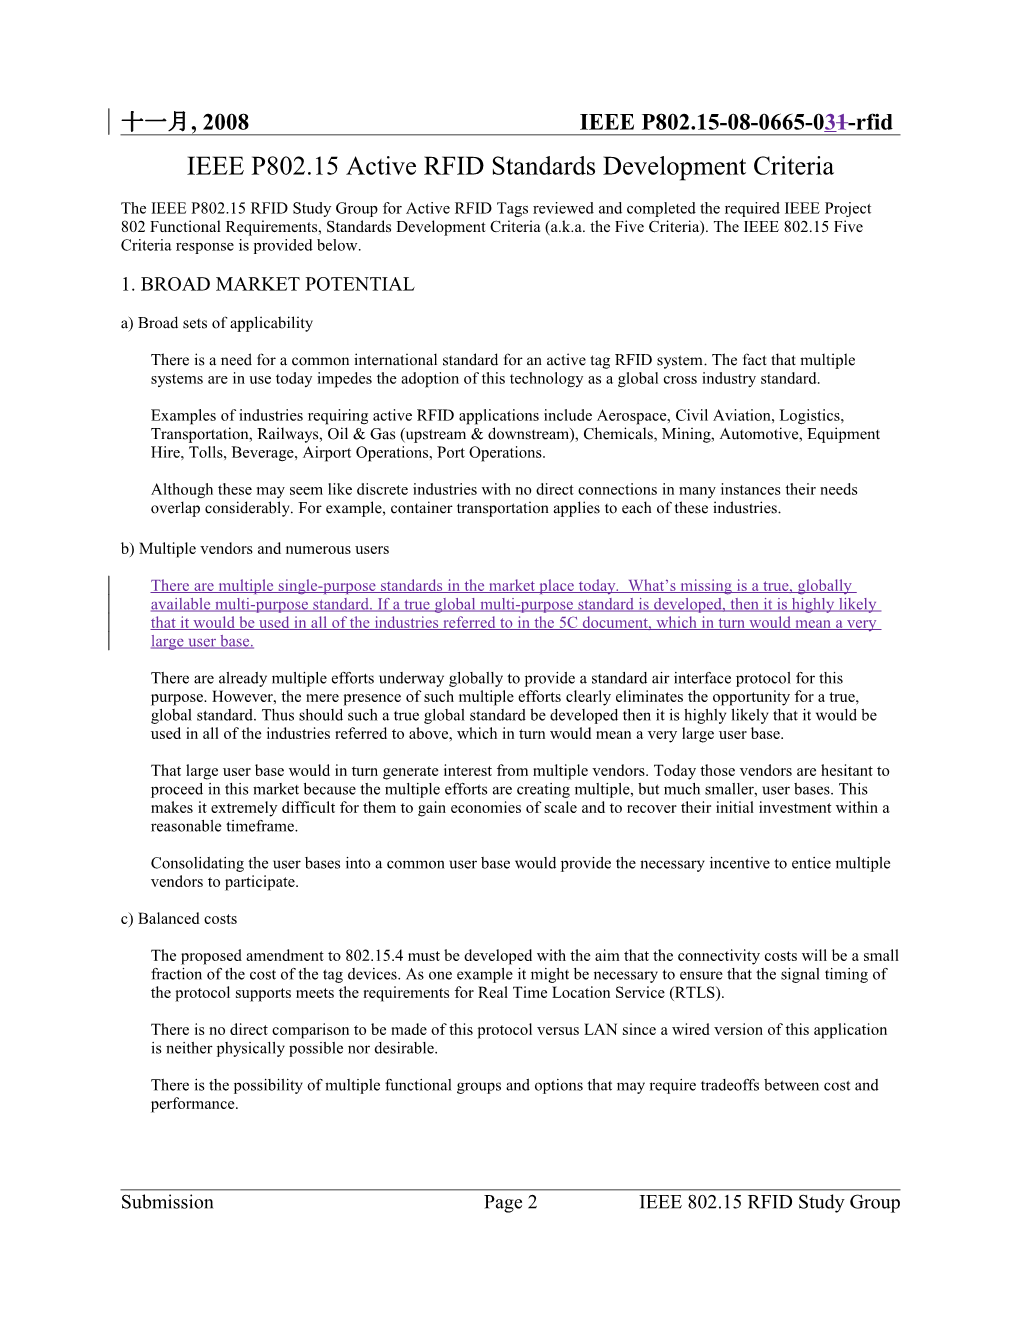 IEEE P802.15 Active RFID Standards Development Criteria